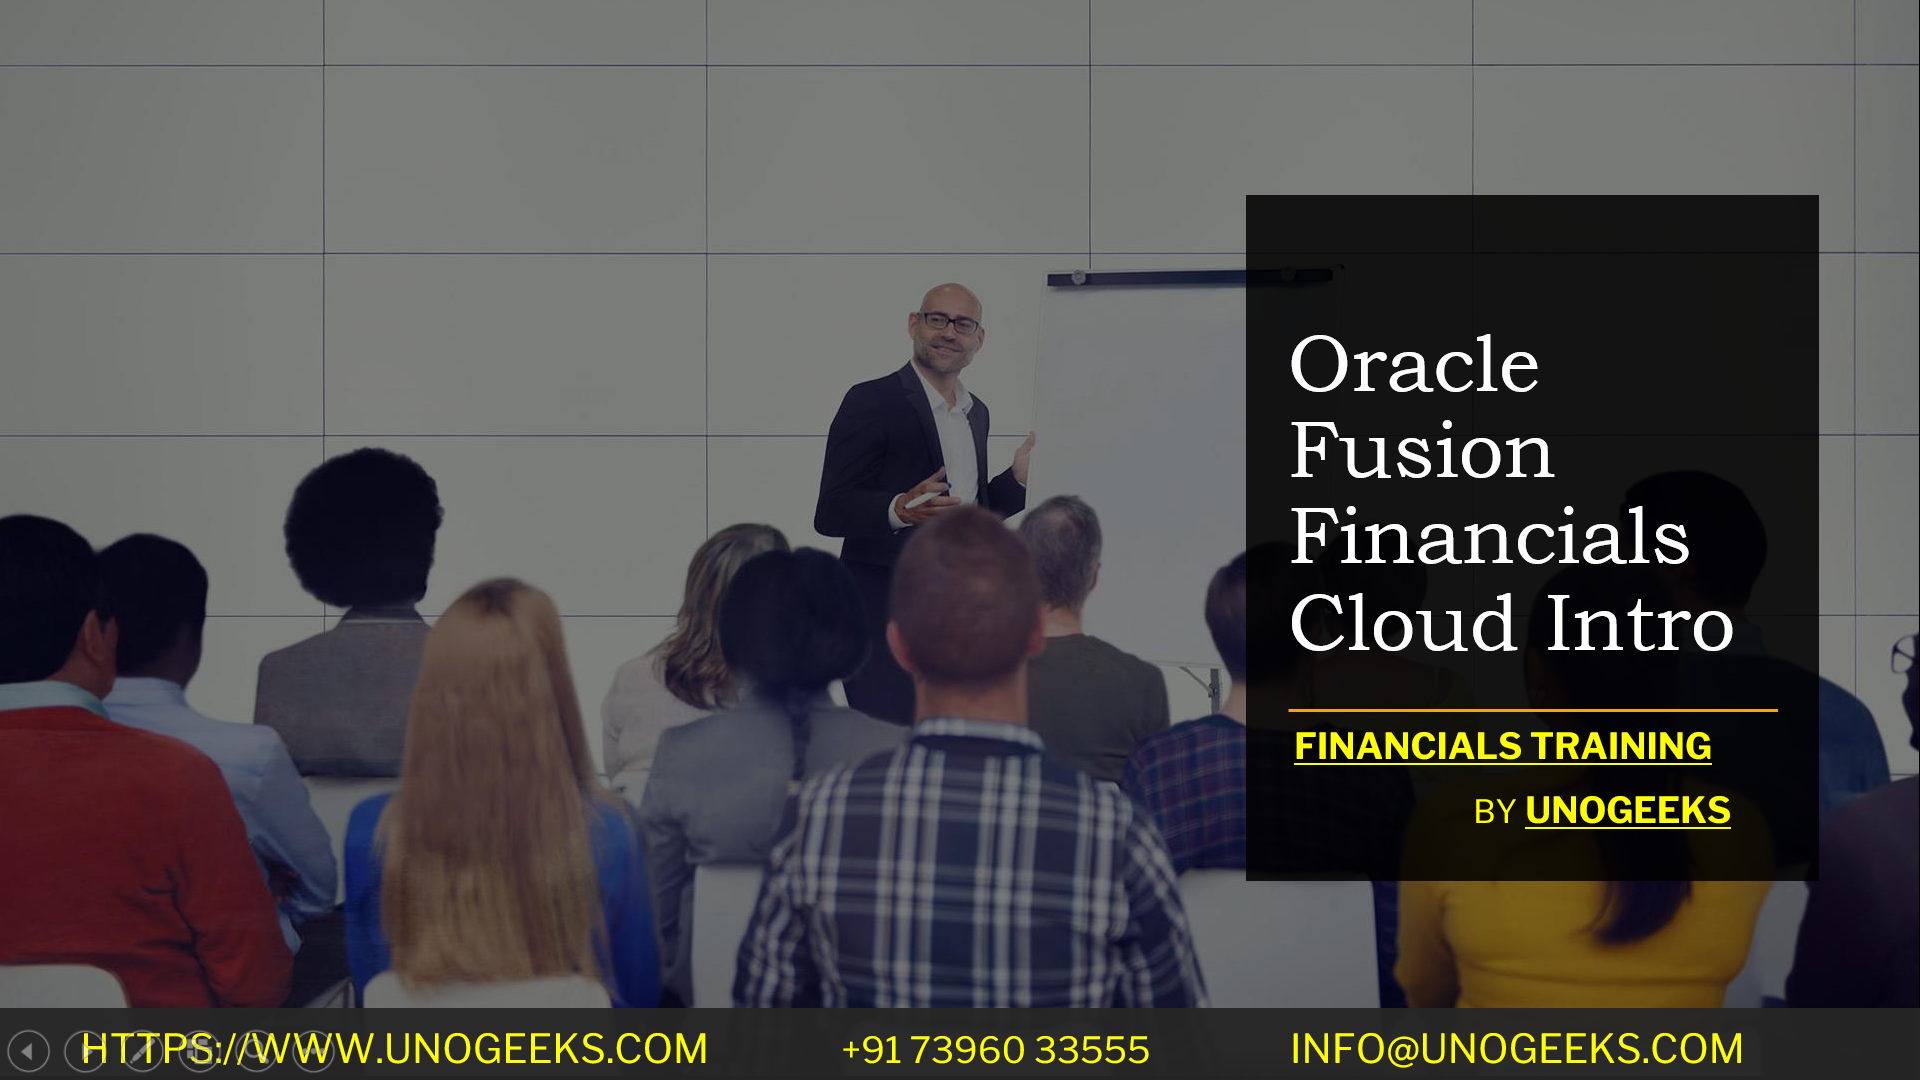 Oracle Fusion Financials Cloud Intro